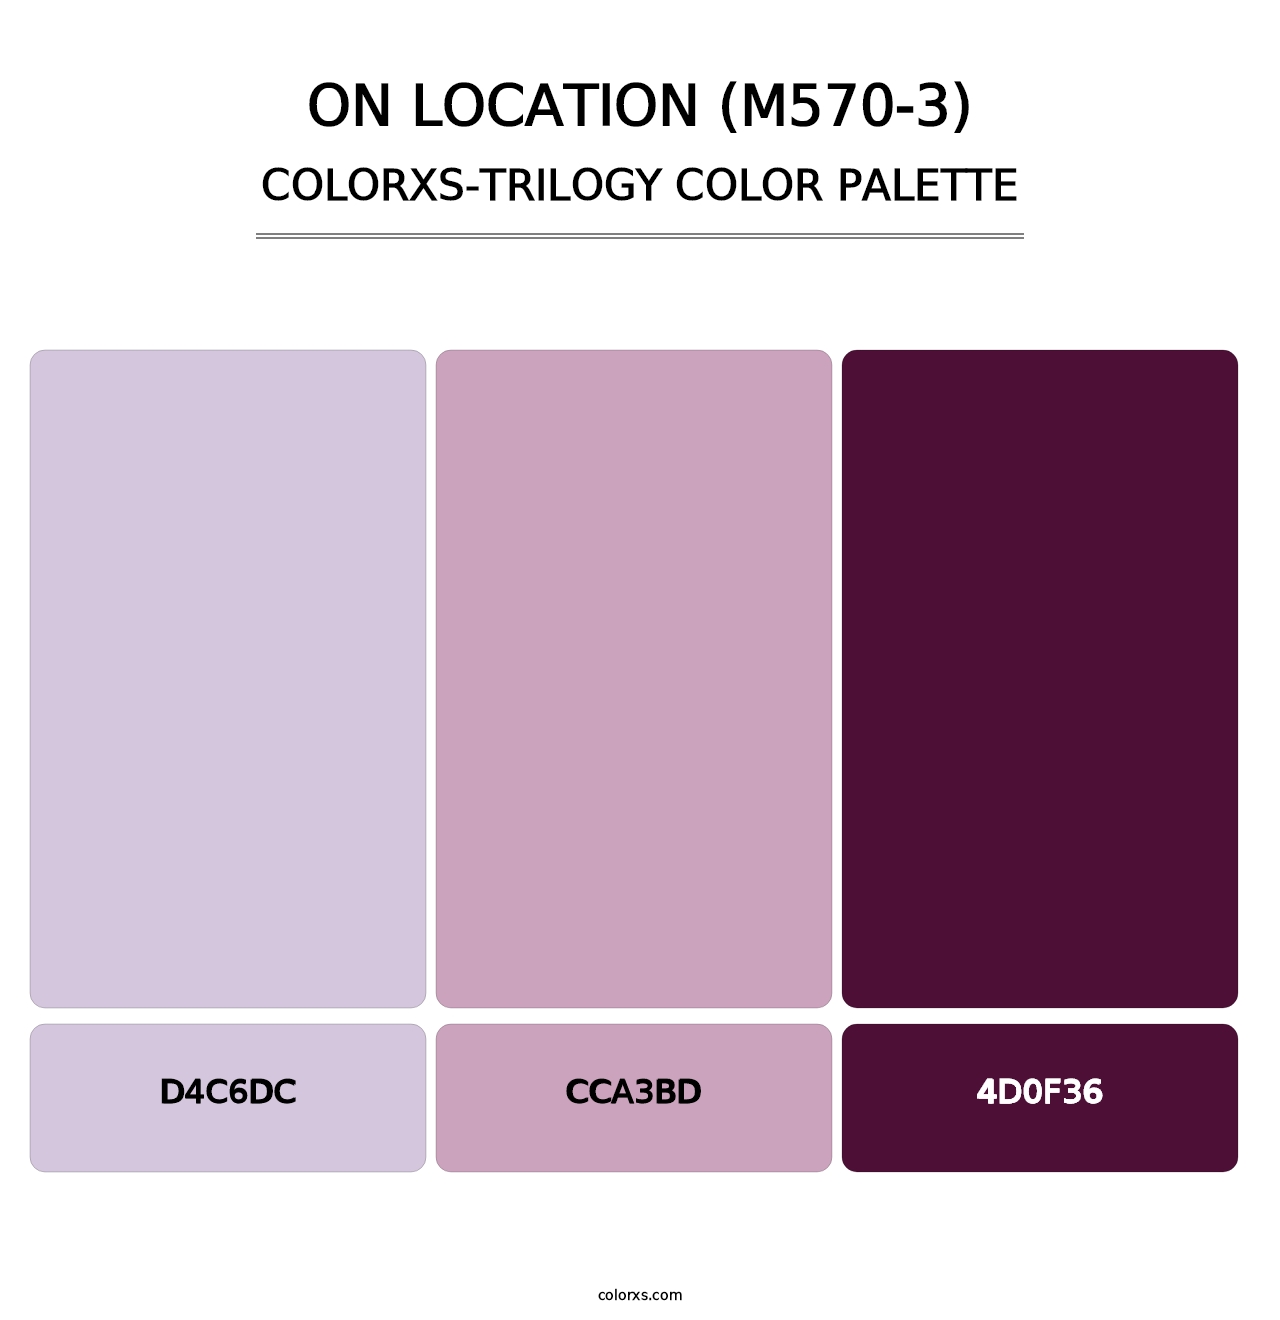 On Location (M570-3) - Colorxs Trilogy Palette